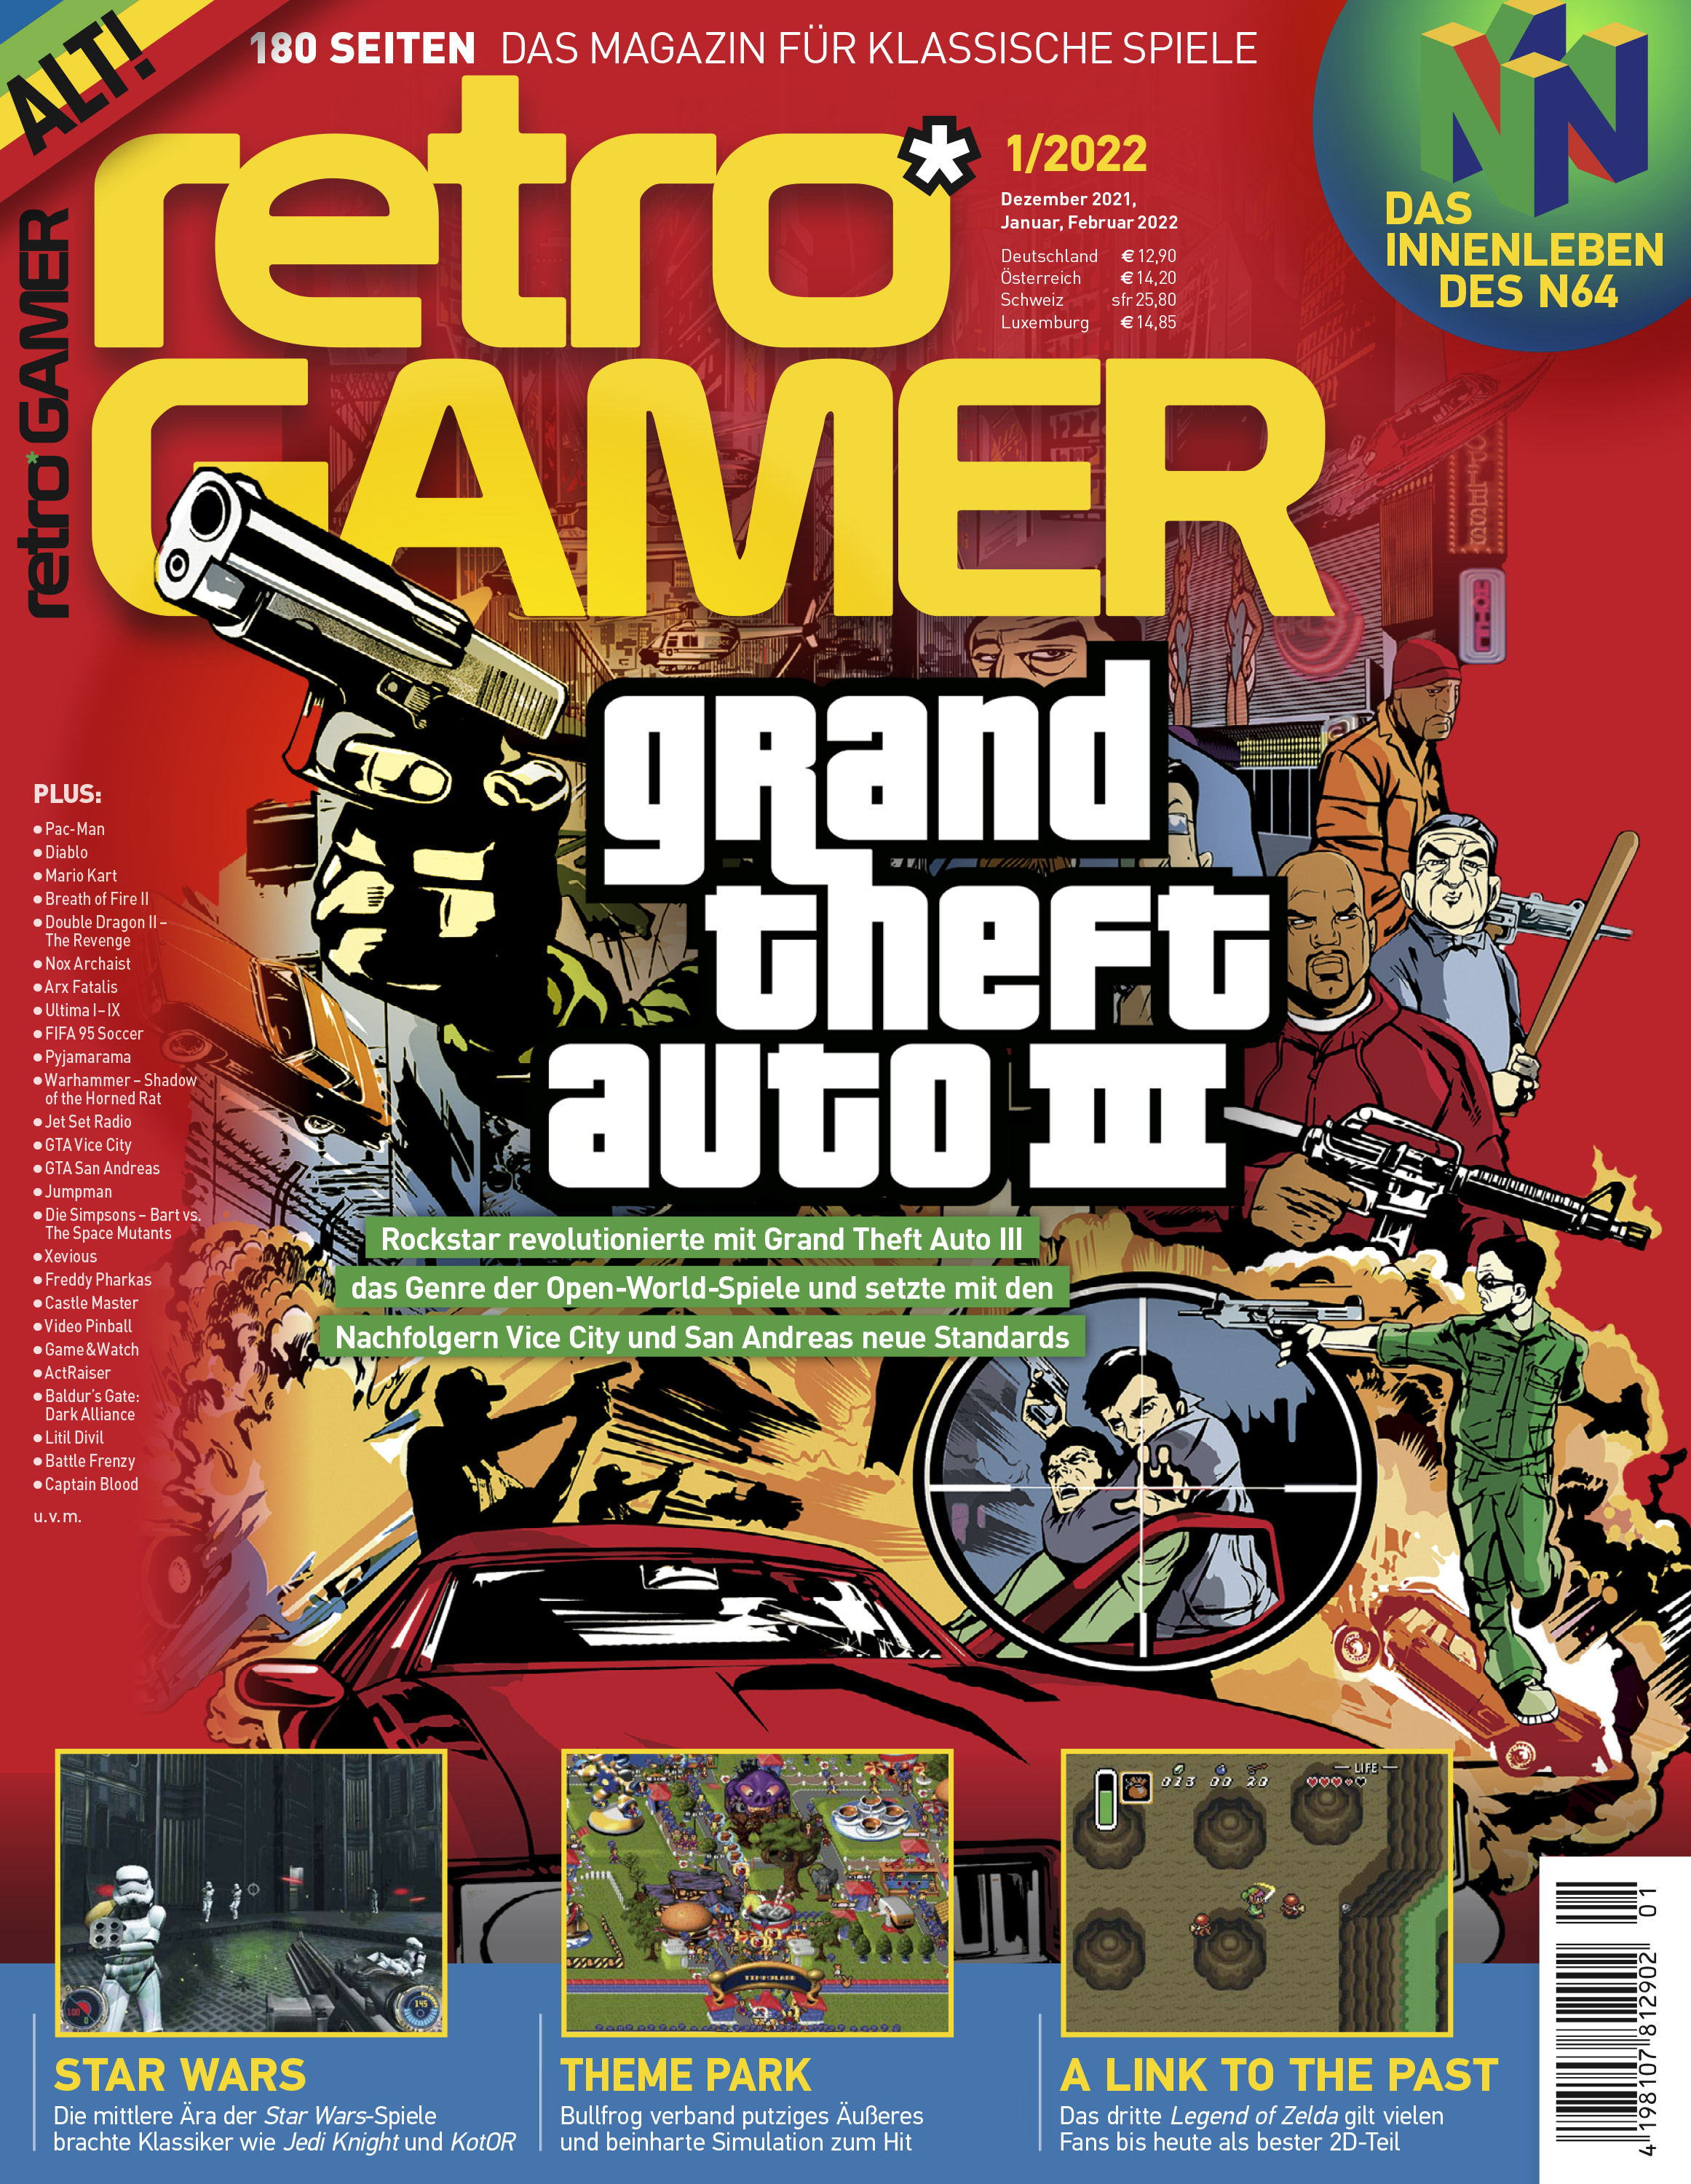 Retro Gamer PDF-Archiv 2022